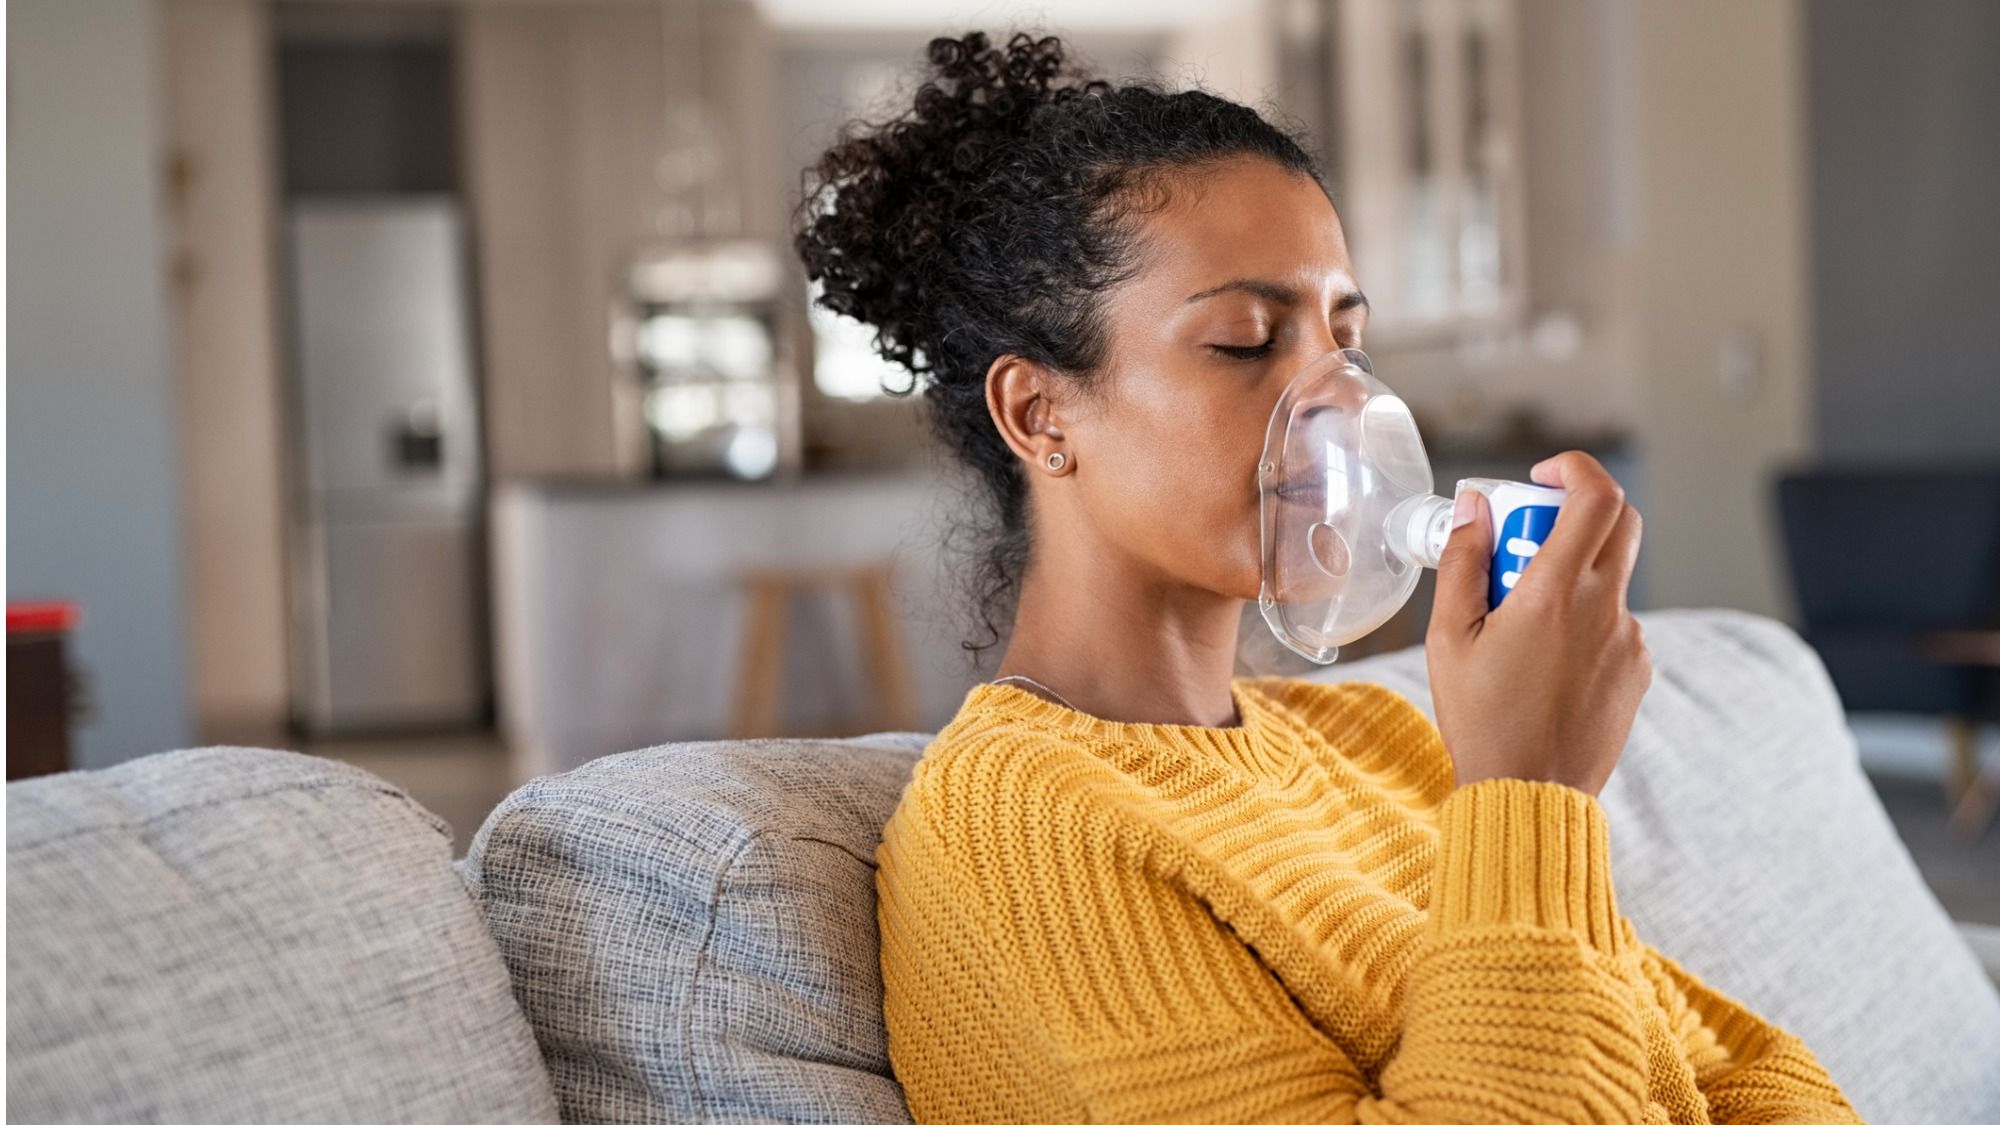 Doen As Respirat Rias Conhe A As Mais Comuns E Como Se Prevenir Elos Previd Ncia Complementar